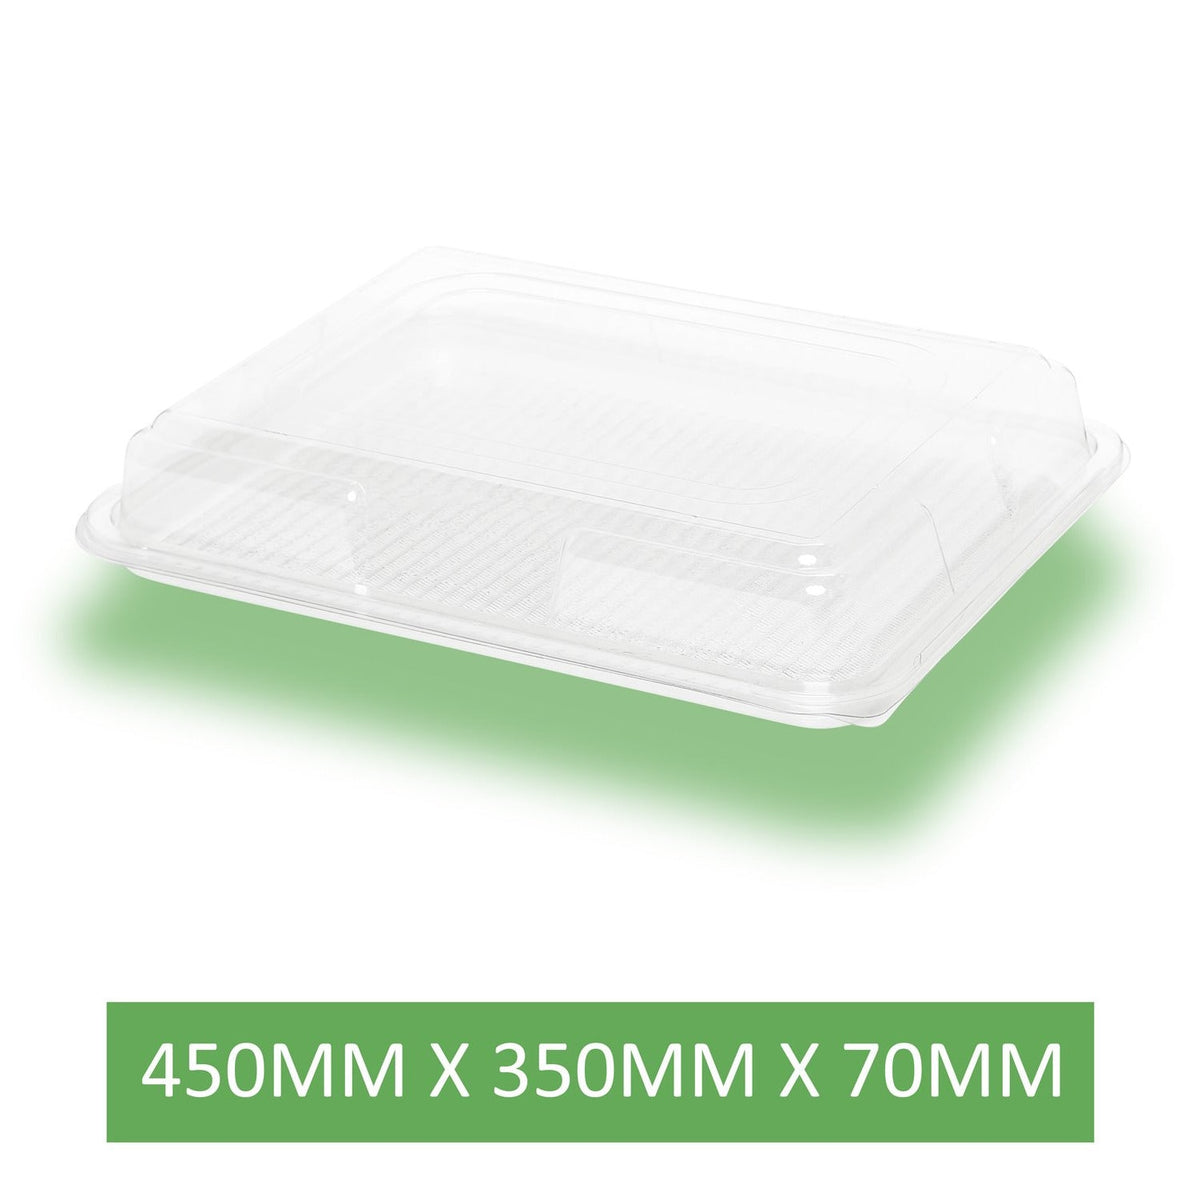 10 x Large Clear Base & Clear Lid Party / Sandwich Platters - 450mm x 310mm x 75mm Deep - Caterline -